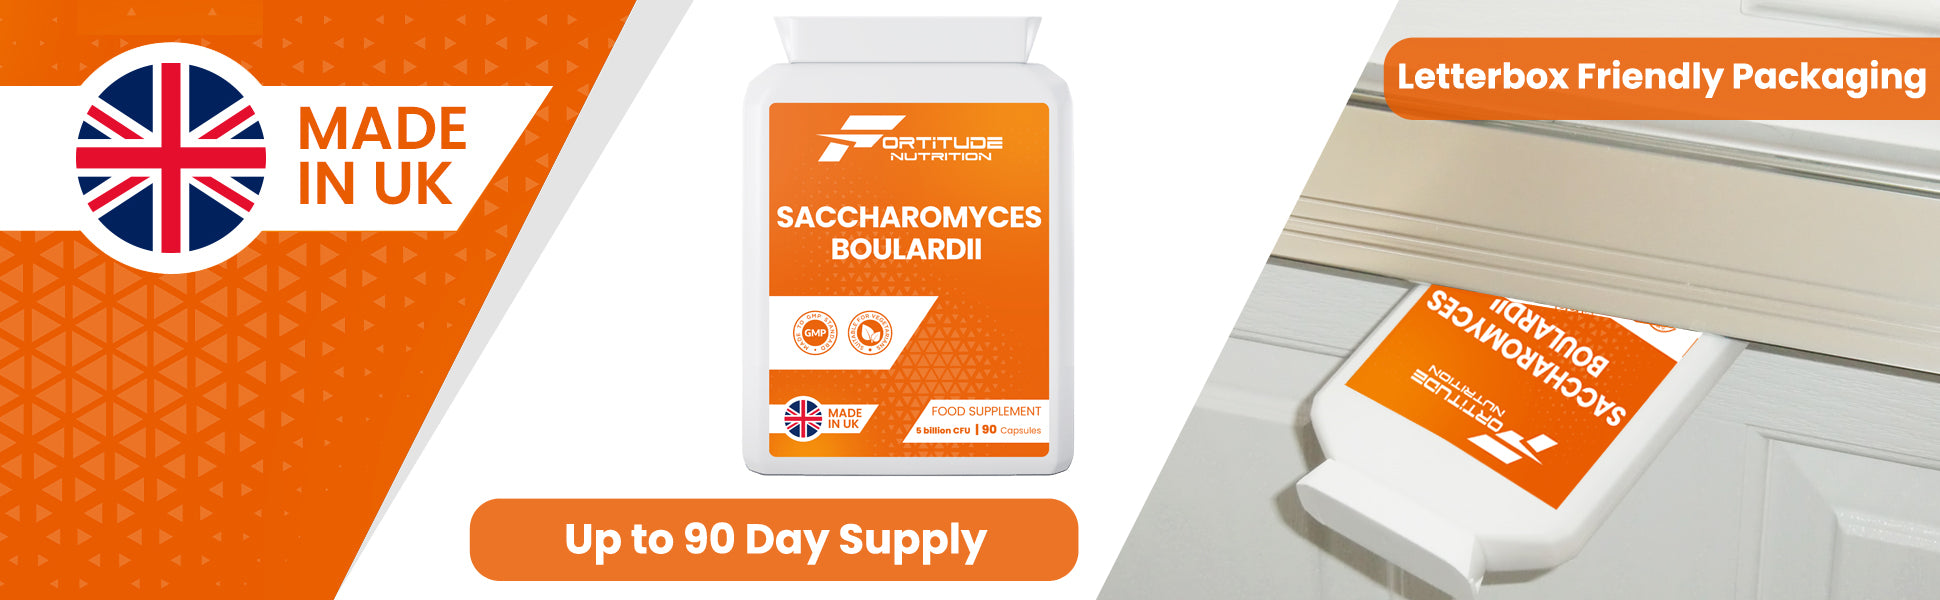 Saccharomyces Boulardii Supplements In Letterbox Friendly Packaging